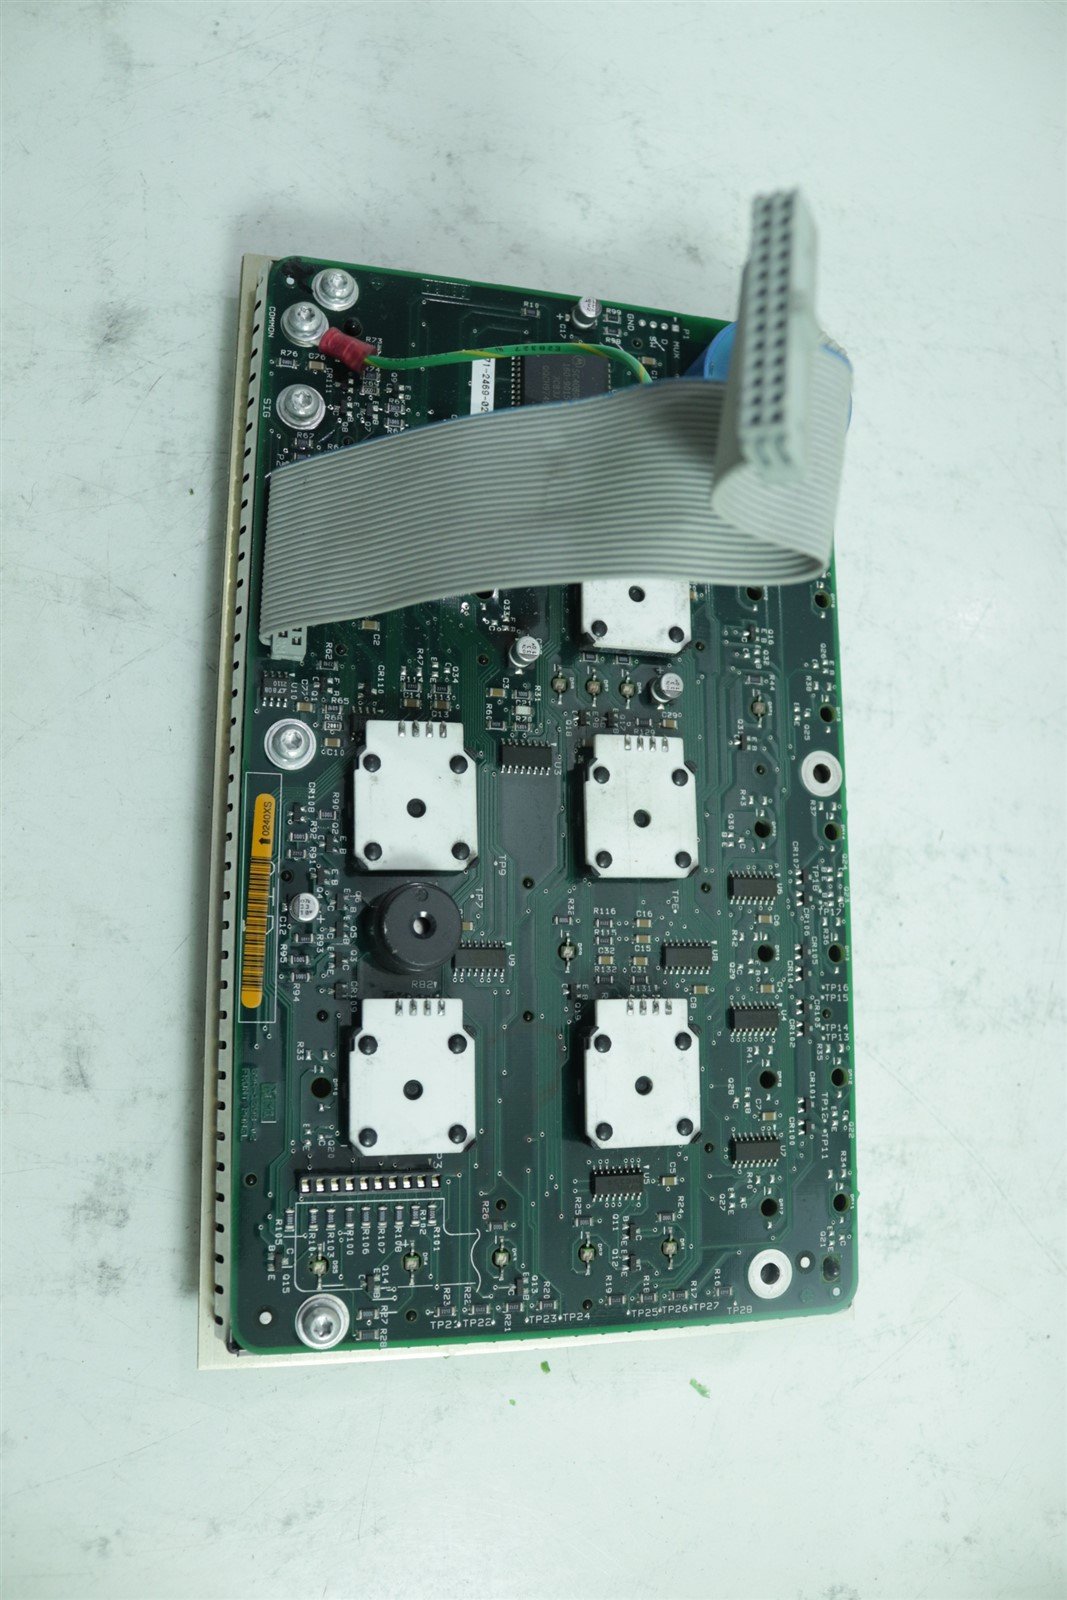 Tektronix OSCILLOSCOPE 520C knob and button Panel 671-2469-02 Tested